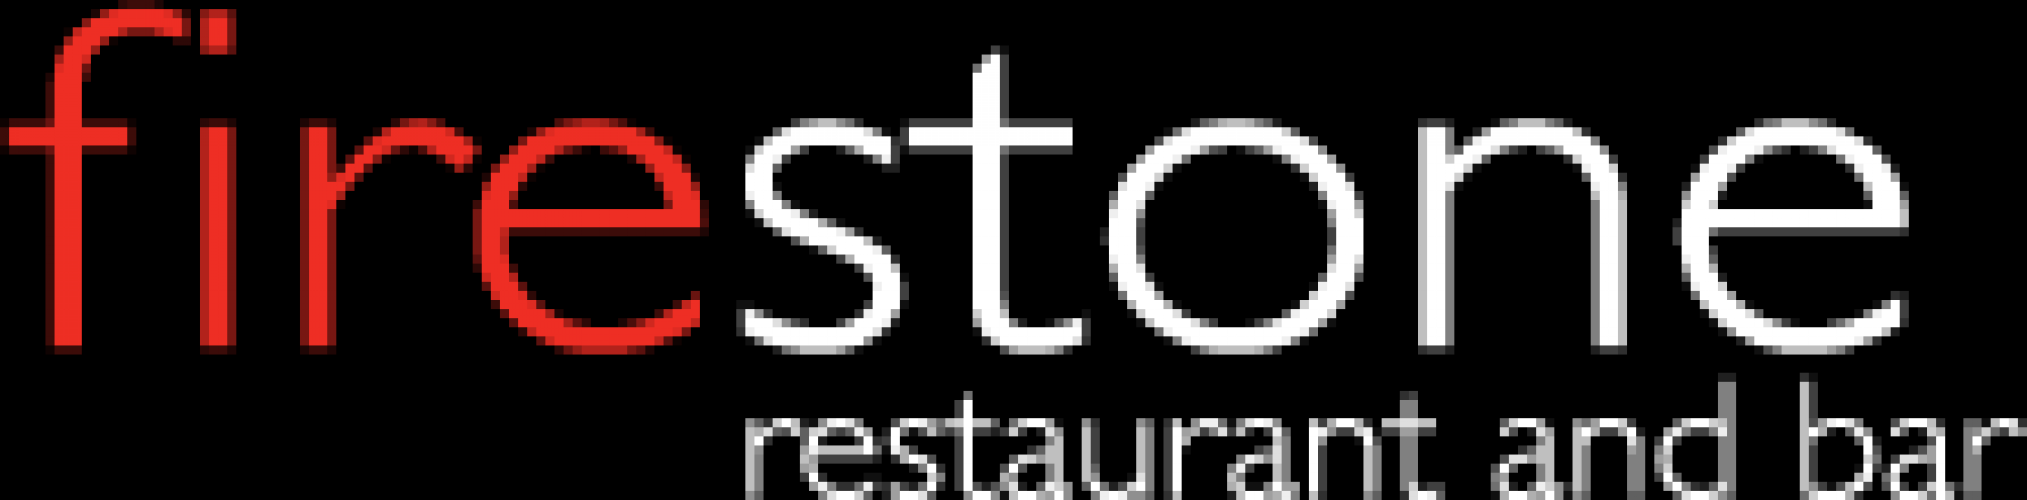 firestone-logo-web